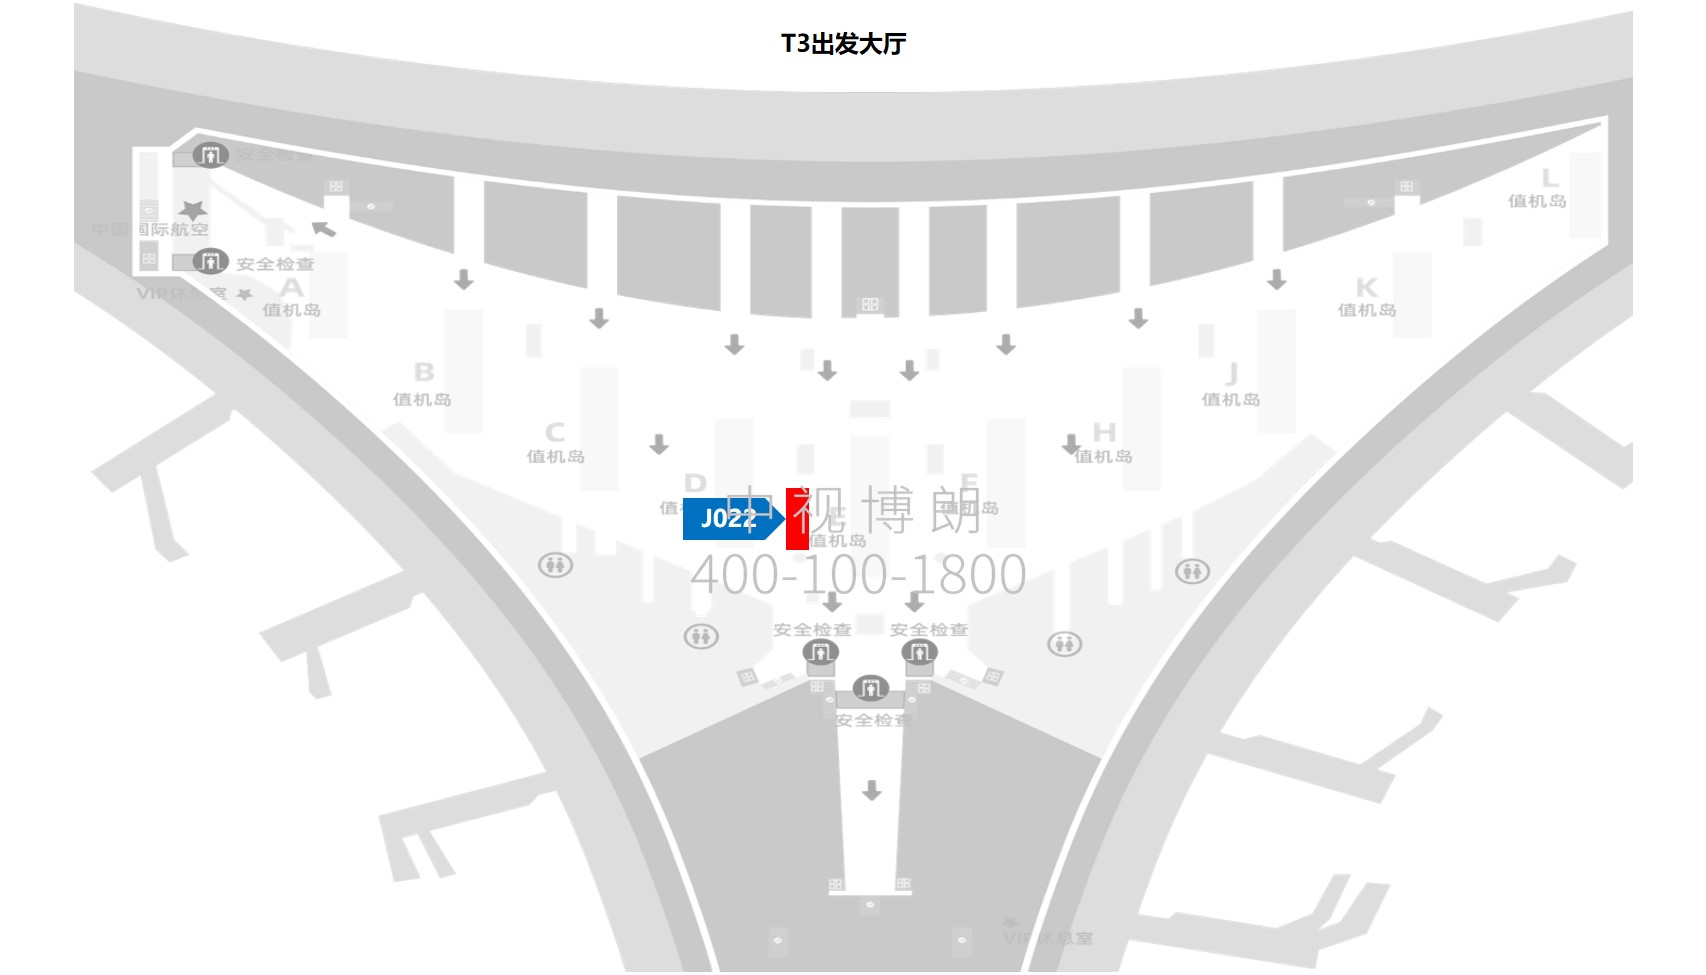 北京首都机场广告-T3 Departure Hall Totem Lightbox J022位置图